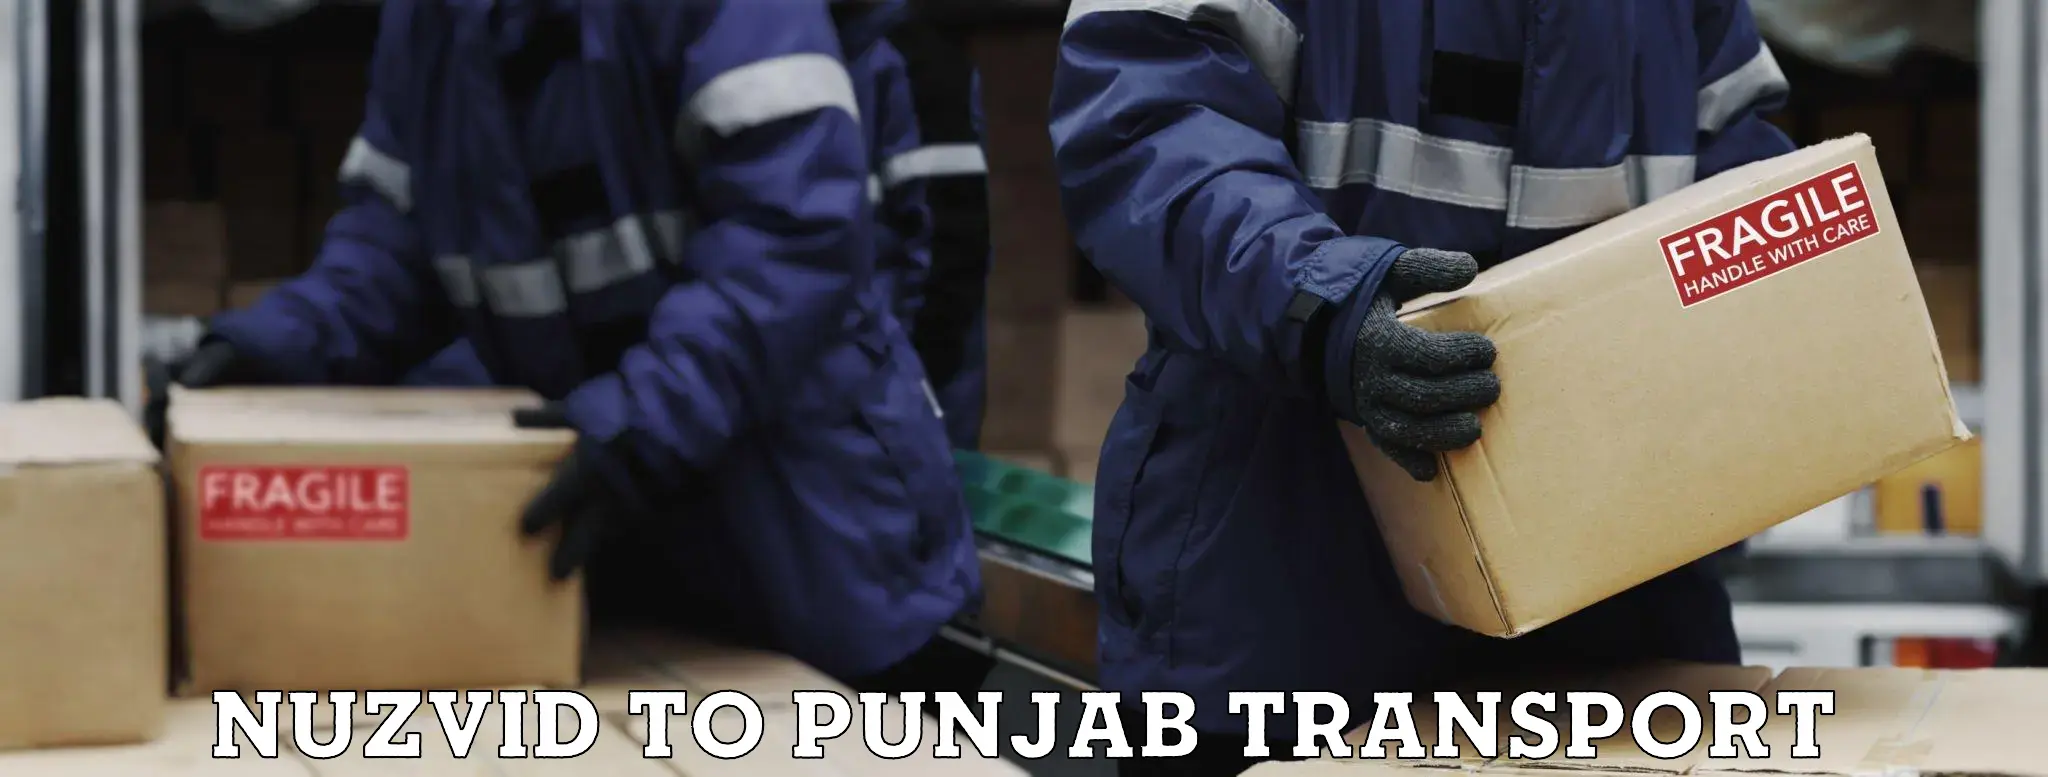 Transport in sharing Nuzvid to Punjab